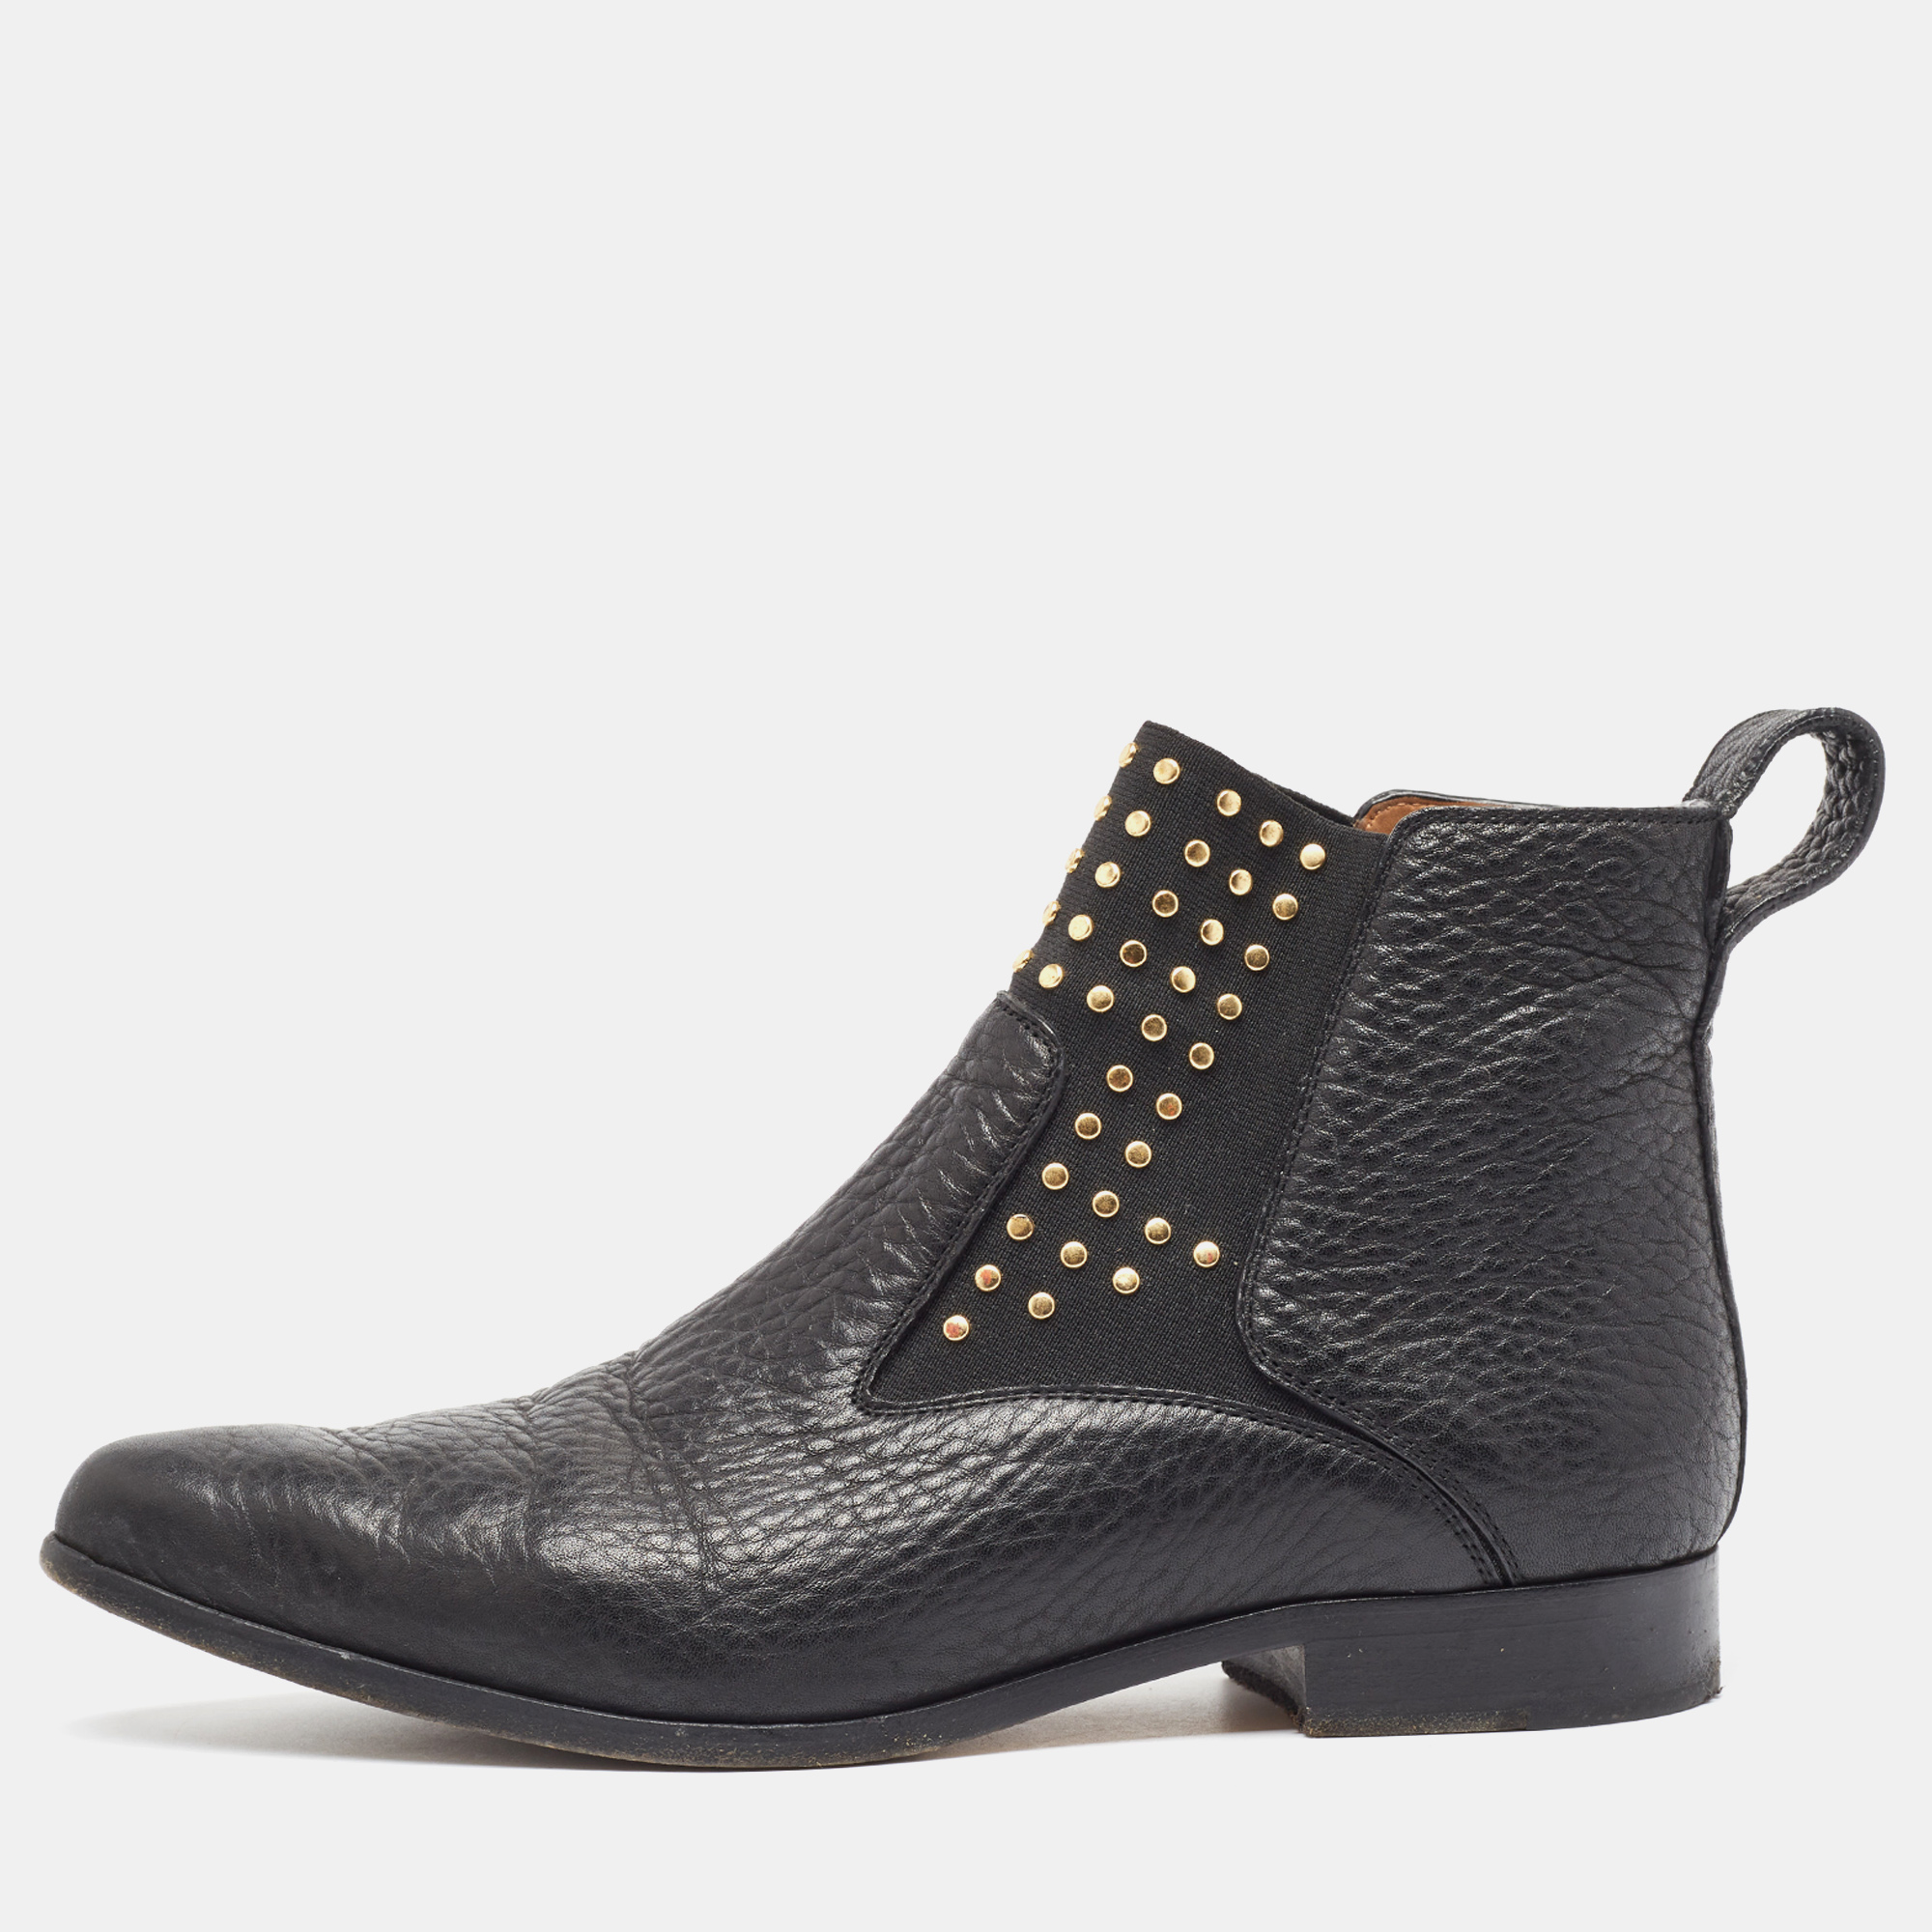 Chloe black leather embellished ankle boots size 38